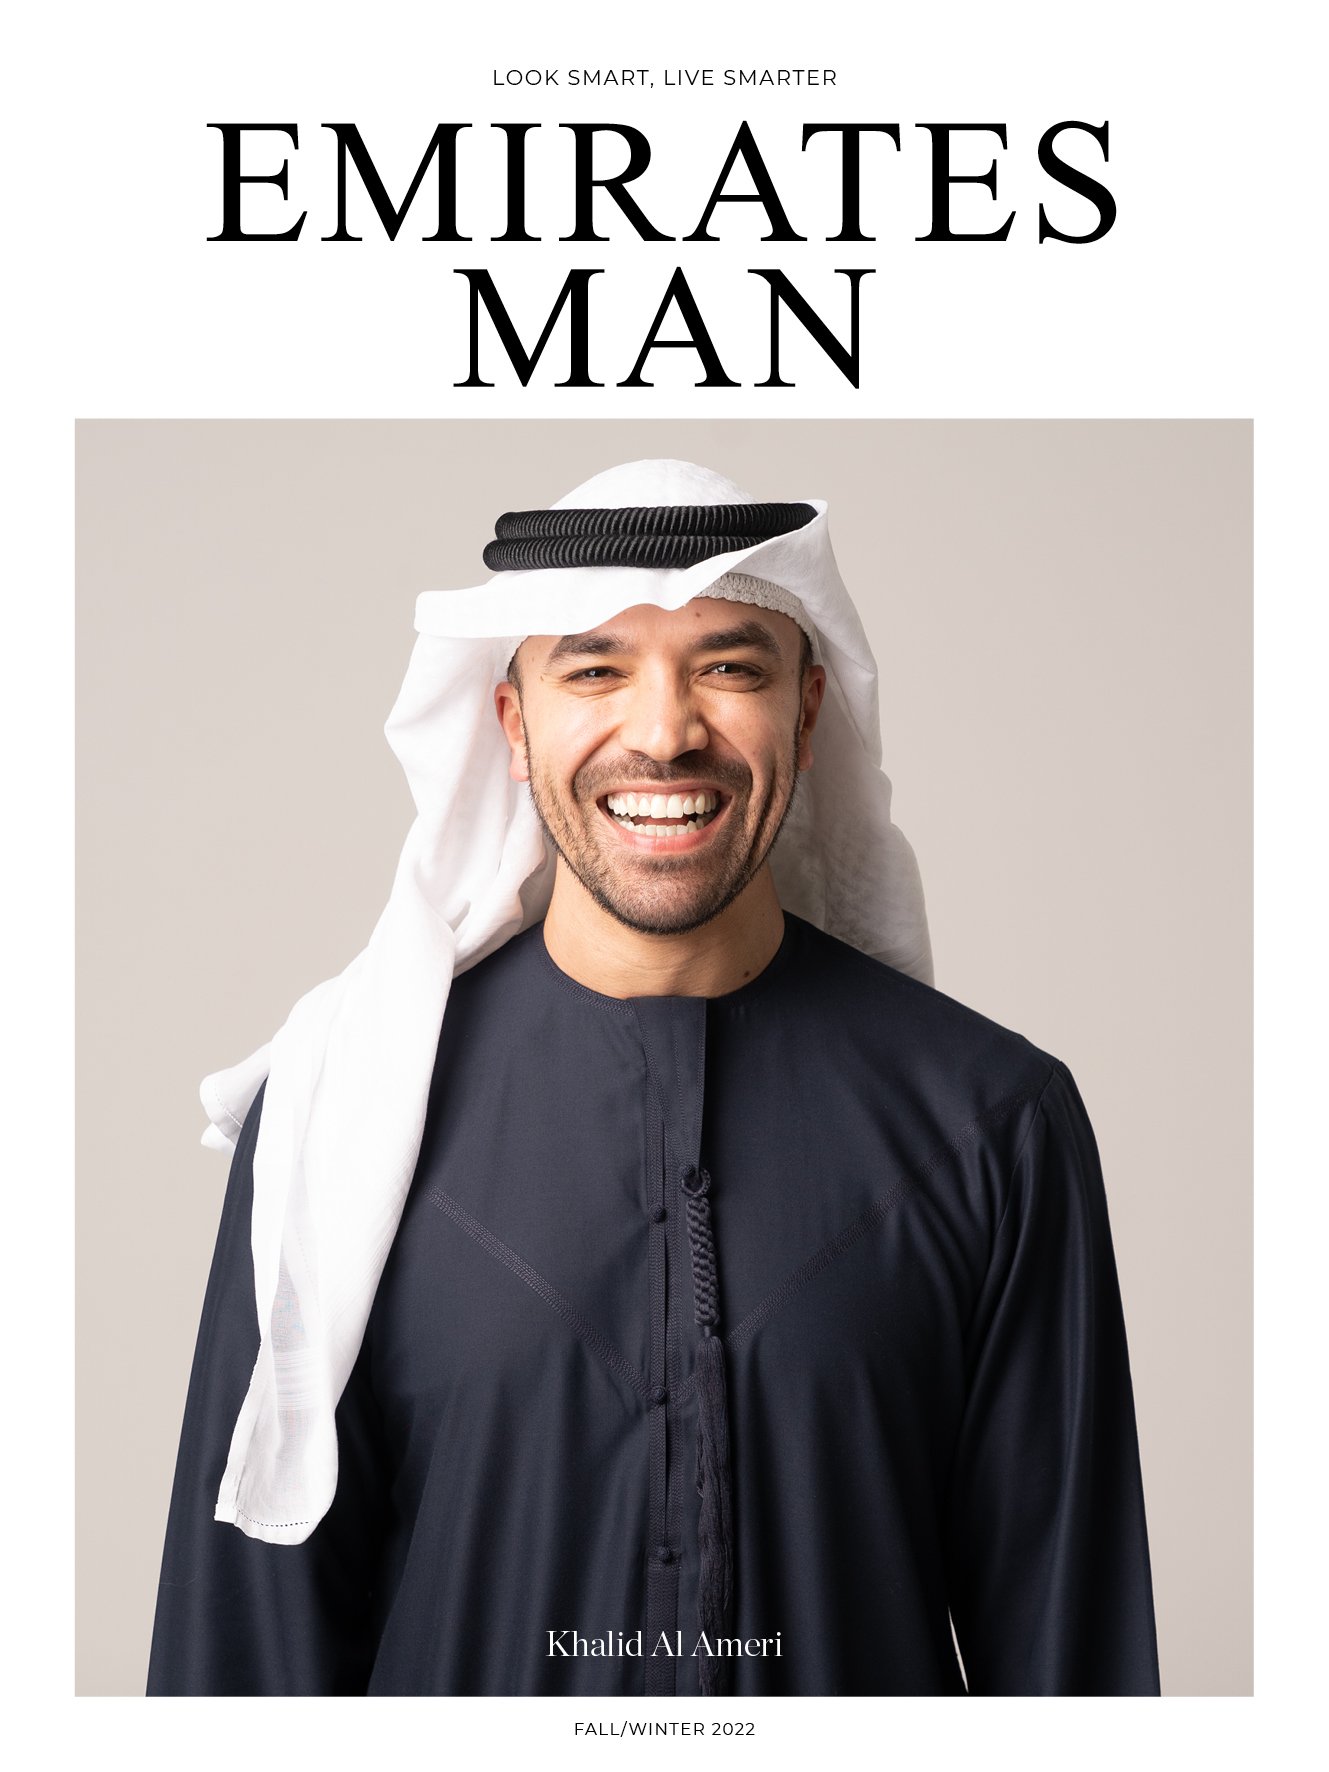 Emirates Man Khalid Al Ameri